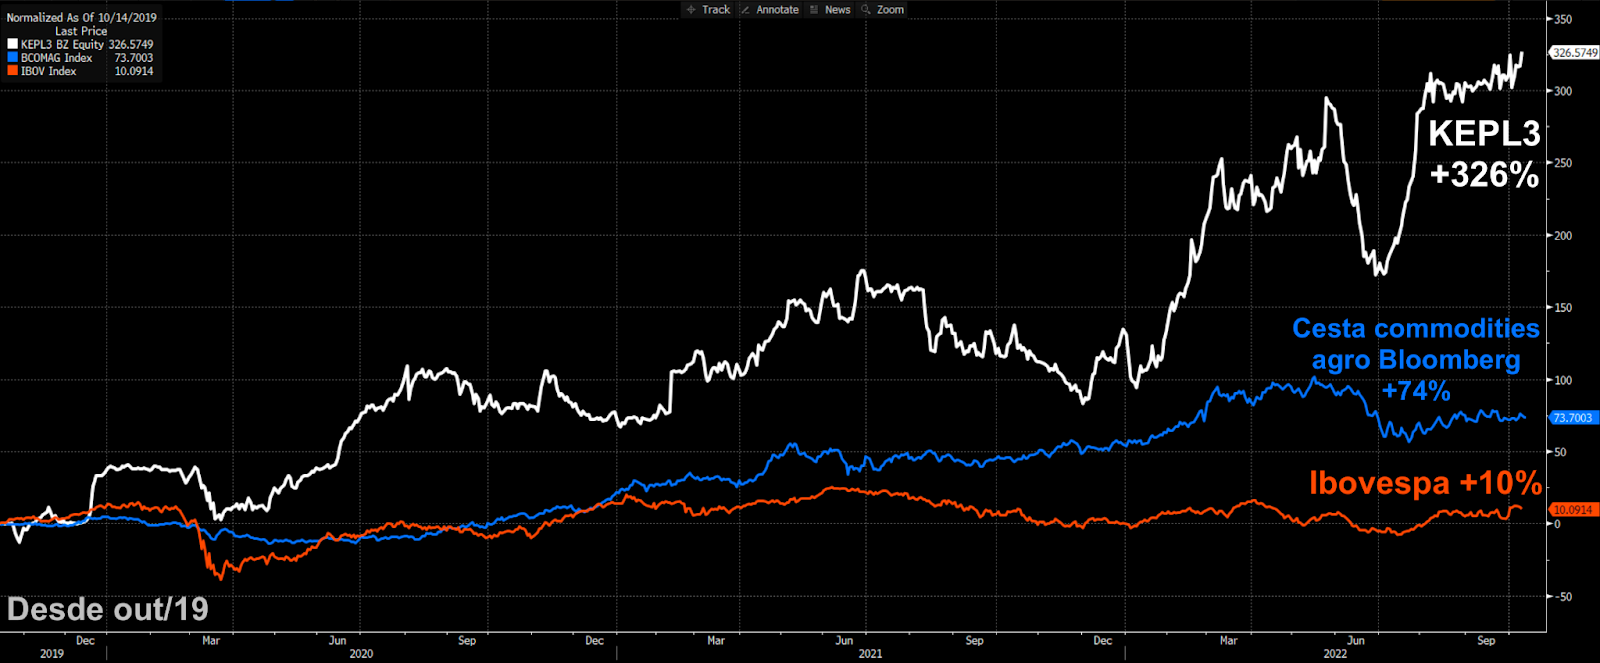 Gráfico apresenta desempenho desde outubro de 2019 de KEPL3 (linha branca), cesta de commodities agrícolas do Bloomberg (azul) e Ibovespa (laranja). 